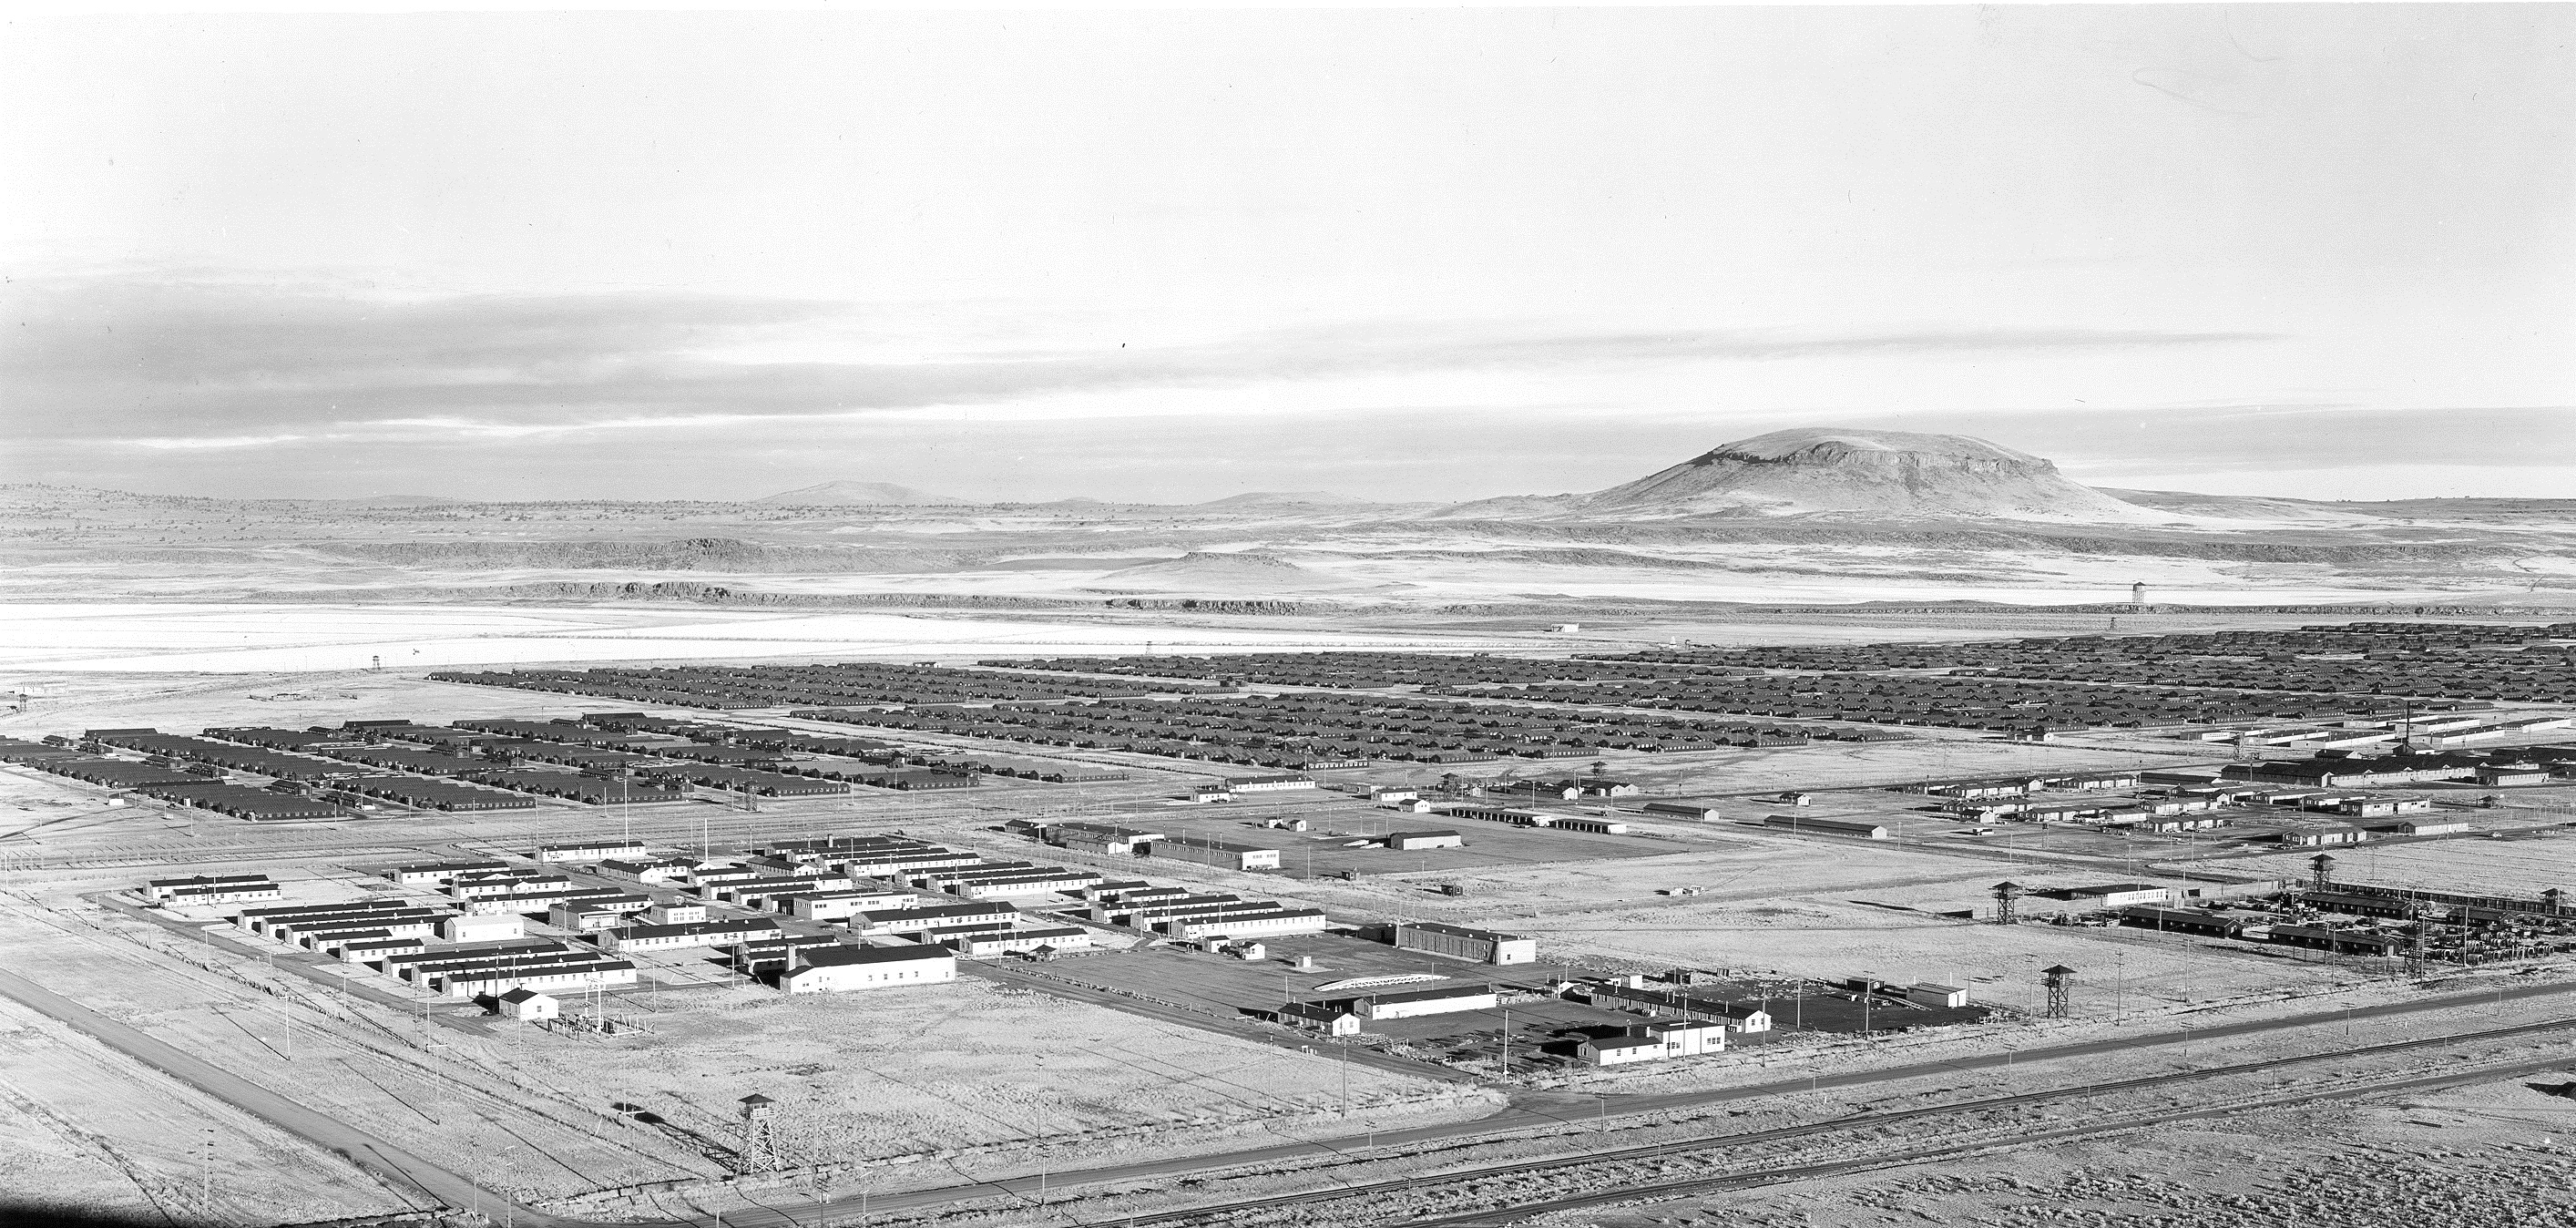 Tule Lake Segregation Center in 1946